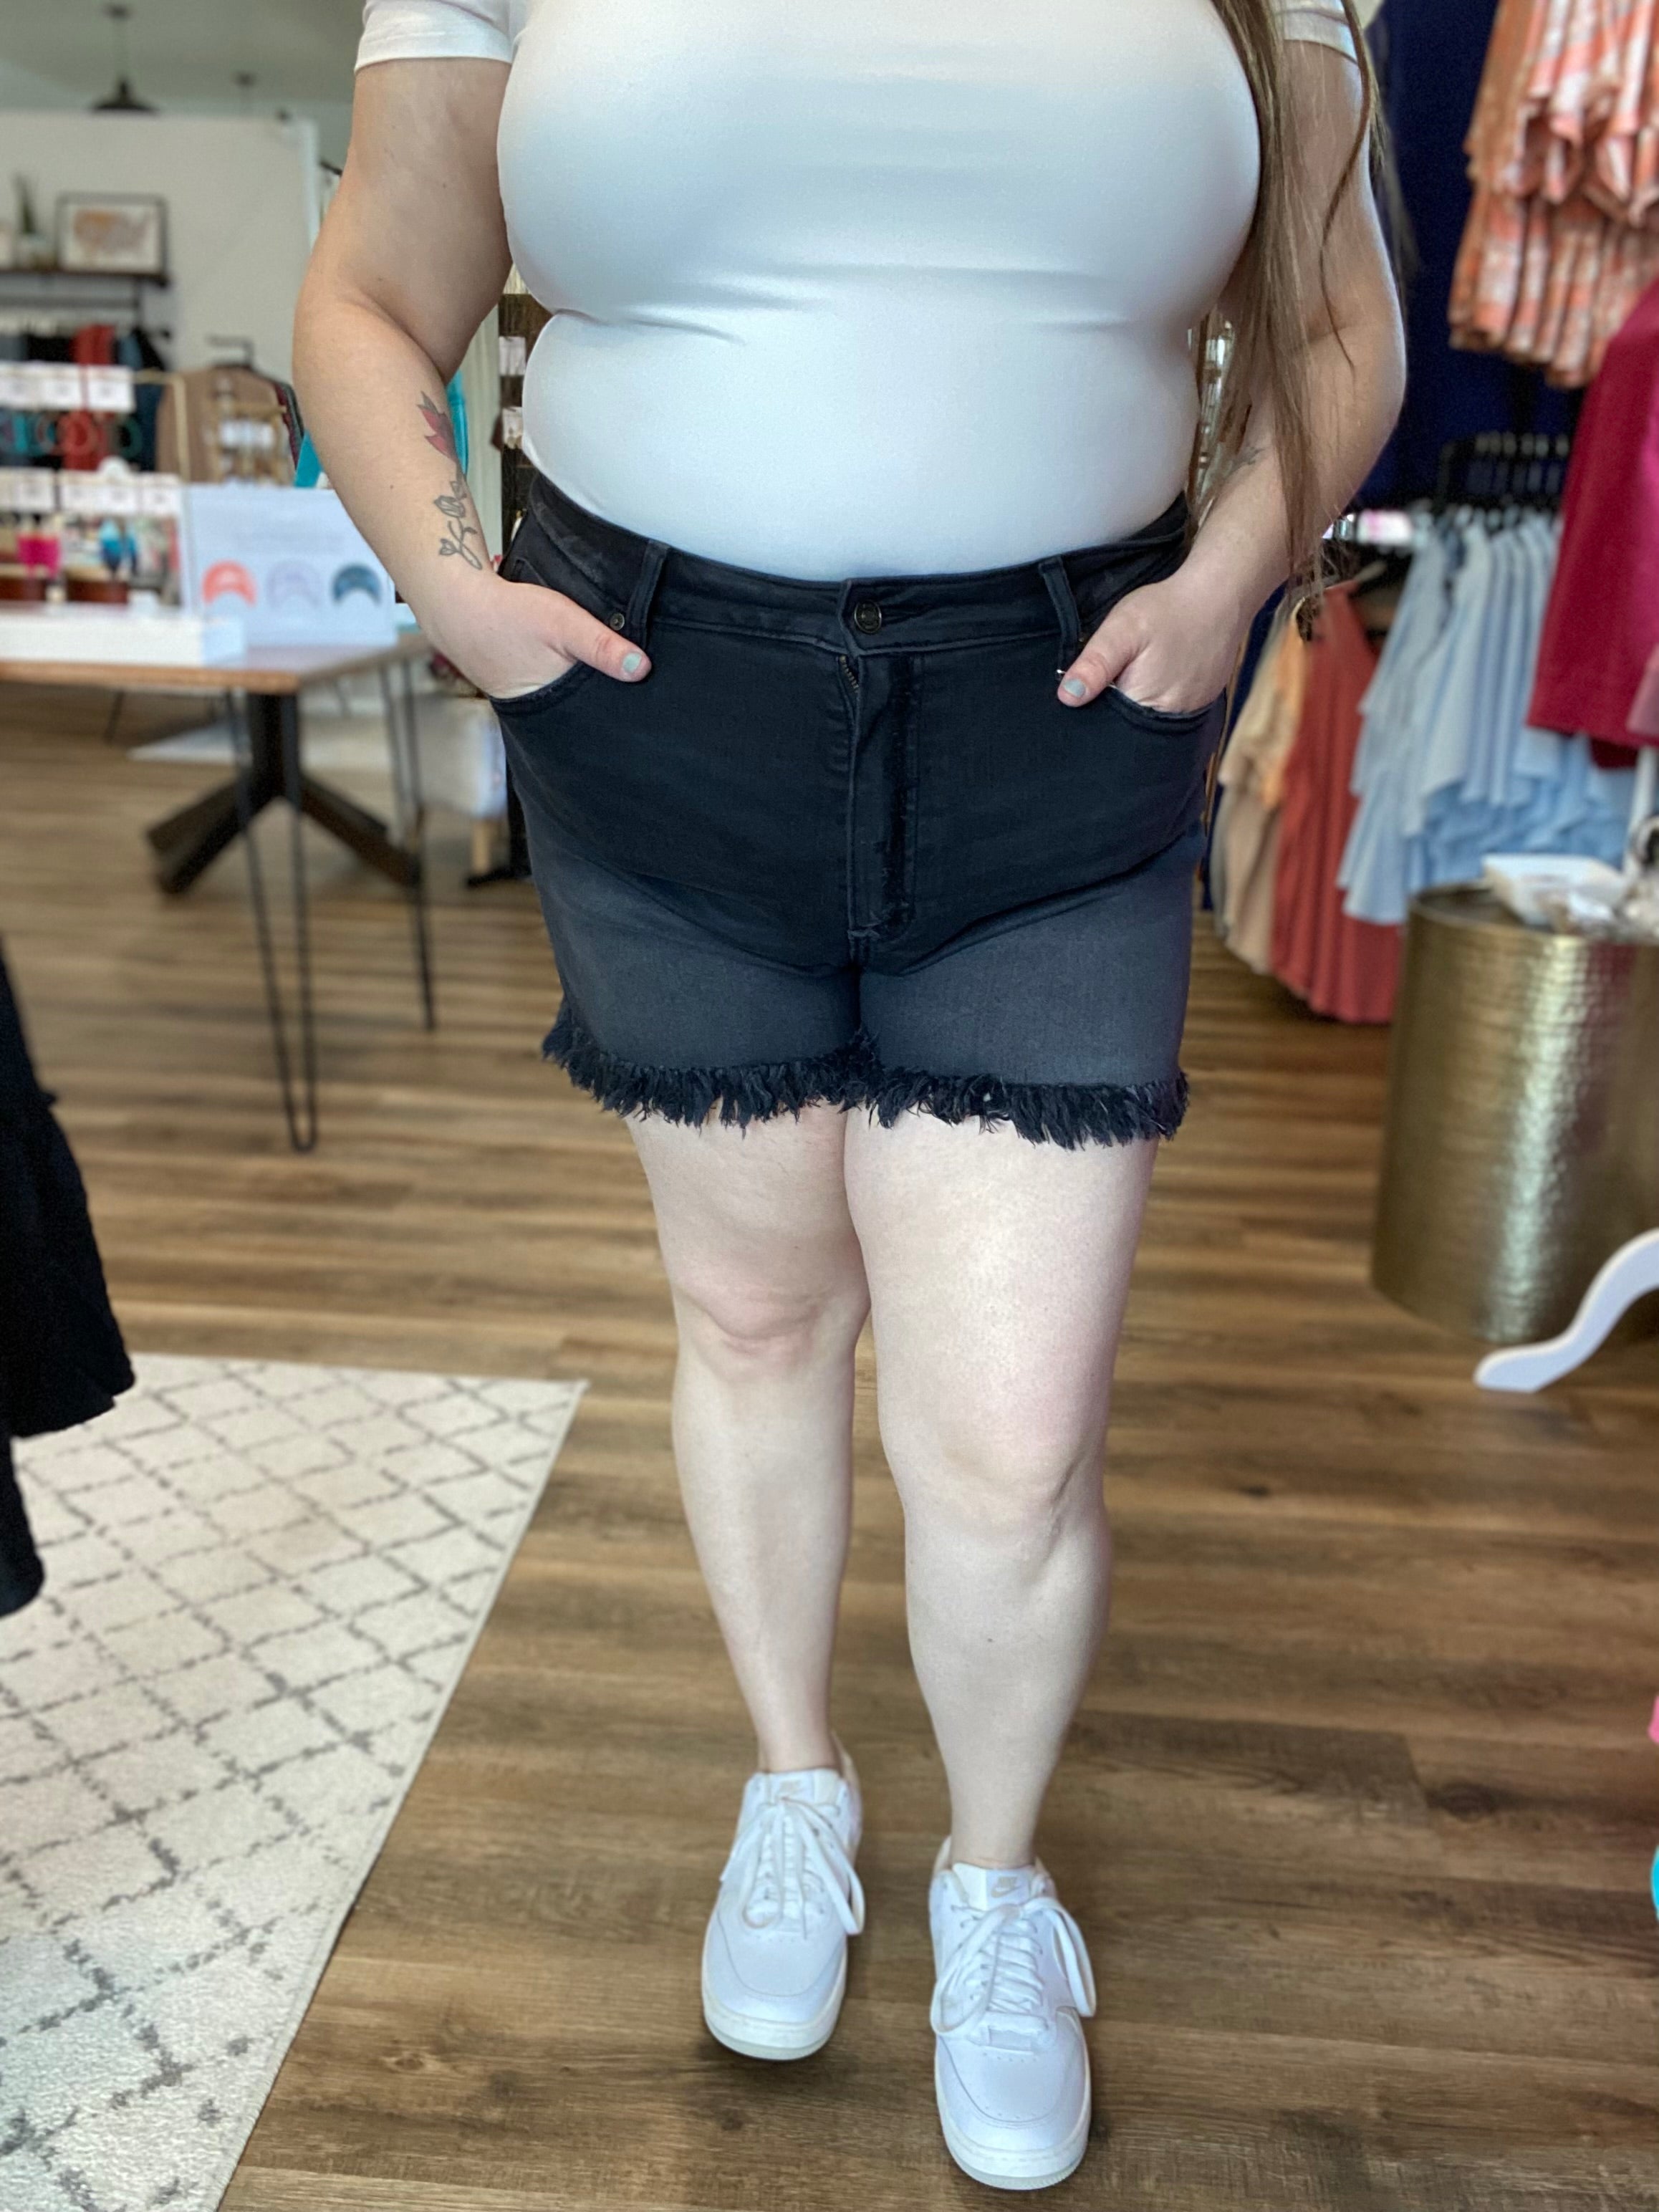 Shop Halle Frayed Black Denim Shorts | Zenana-Shorts at Ruby Joy Boutique, a Women's Clothing Store in Pickerington, Ohio